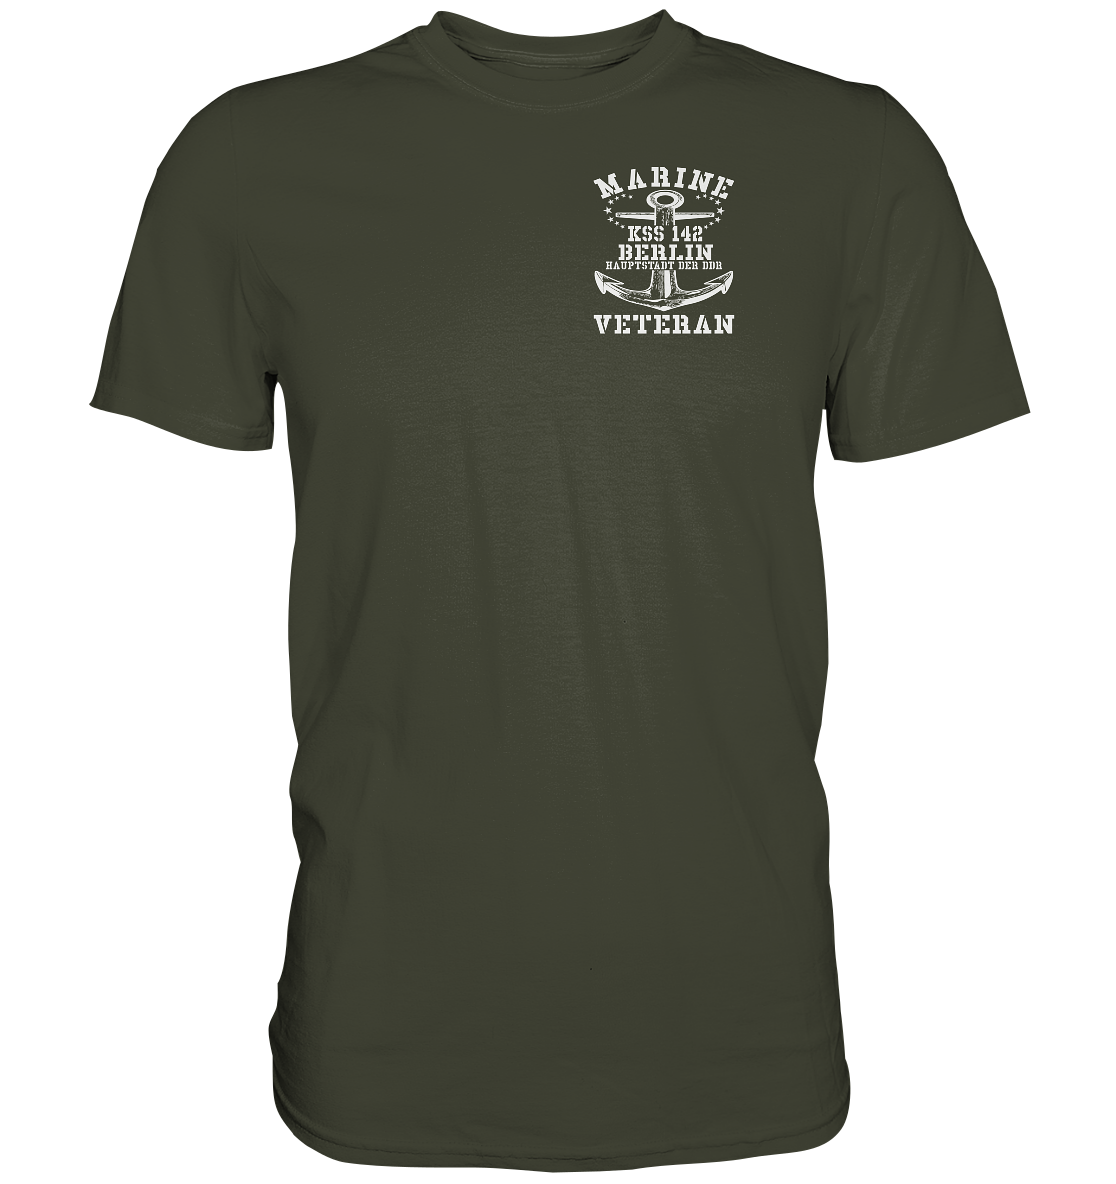 KSS 142 BERLIN - HAUPTSTADT DER DDR Marine Veteran Brustlogo - Premium Shirt